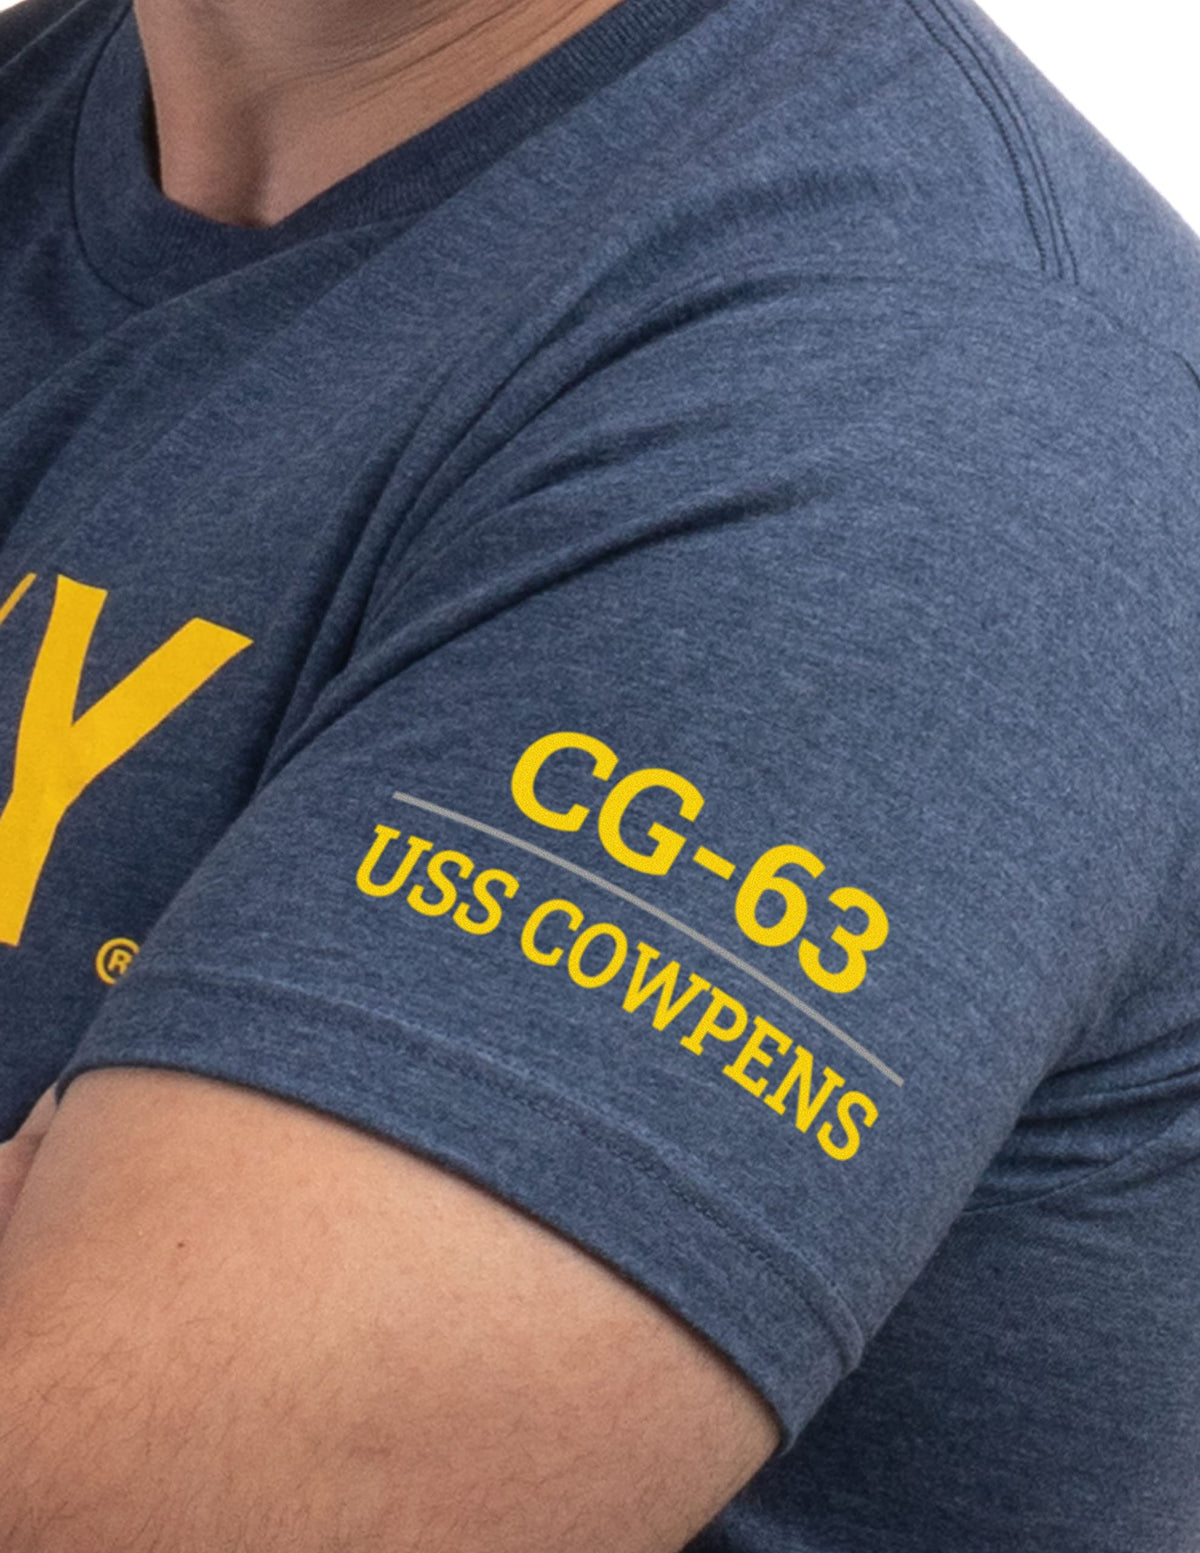 USS Cowpens, CG-63 | U.S. Navy Sailor Veteran USN United States Naval T-shirt for Men Women